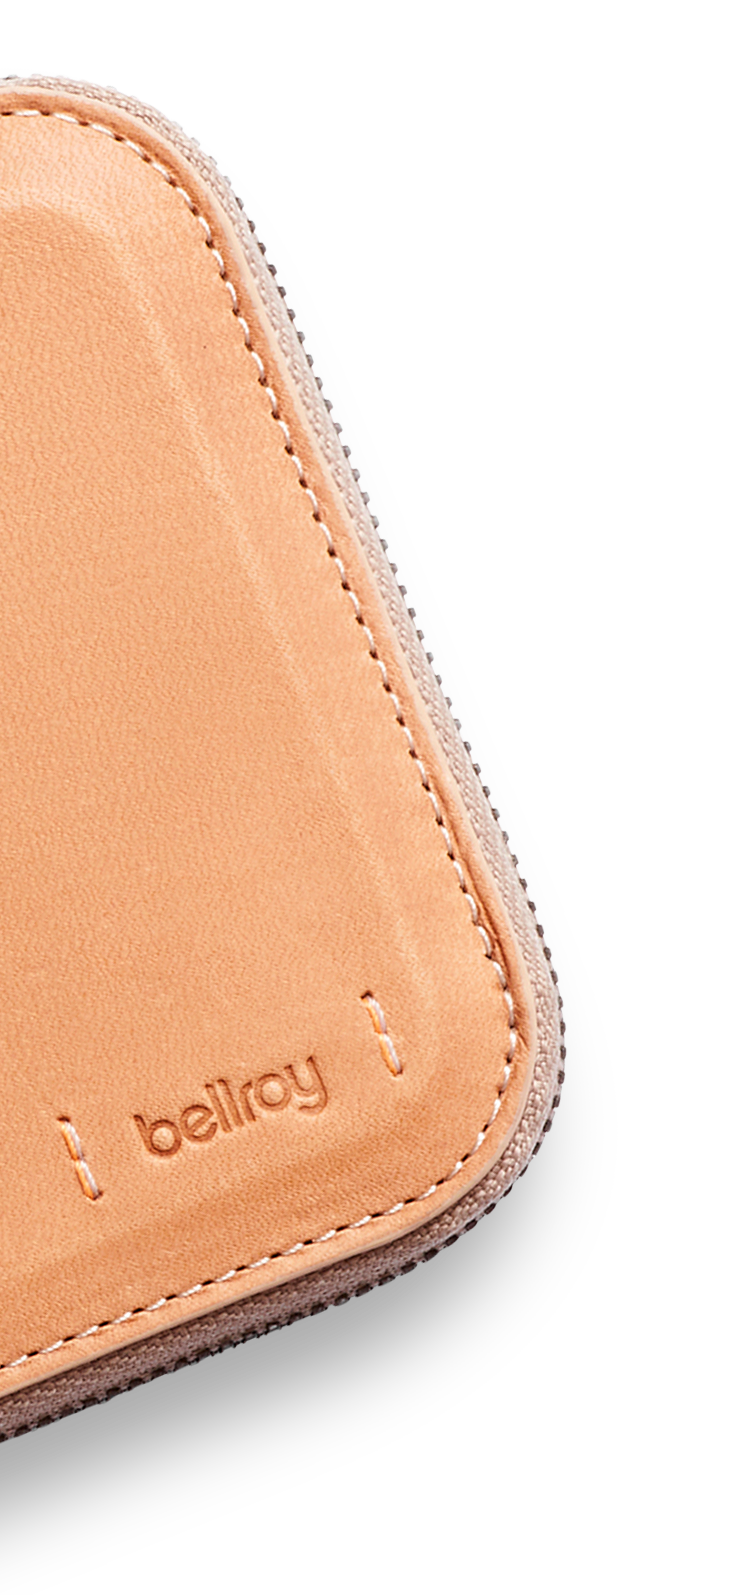 Bellroy Brand Guide